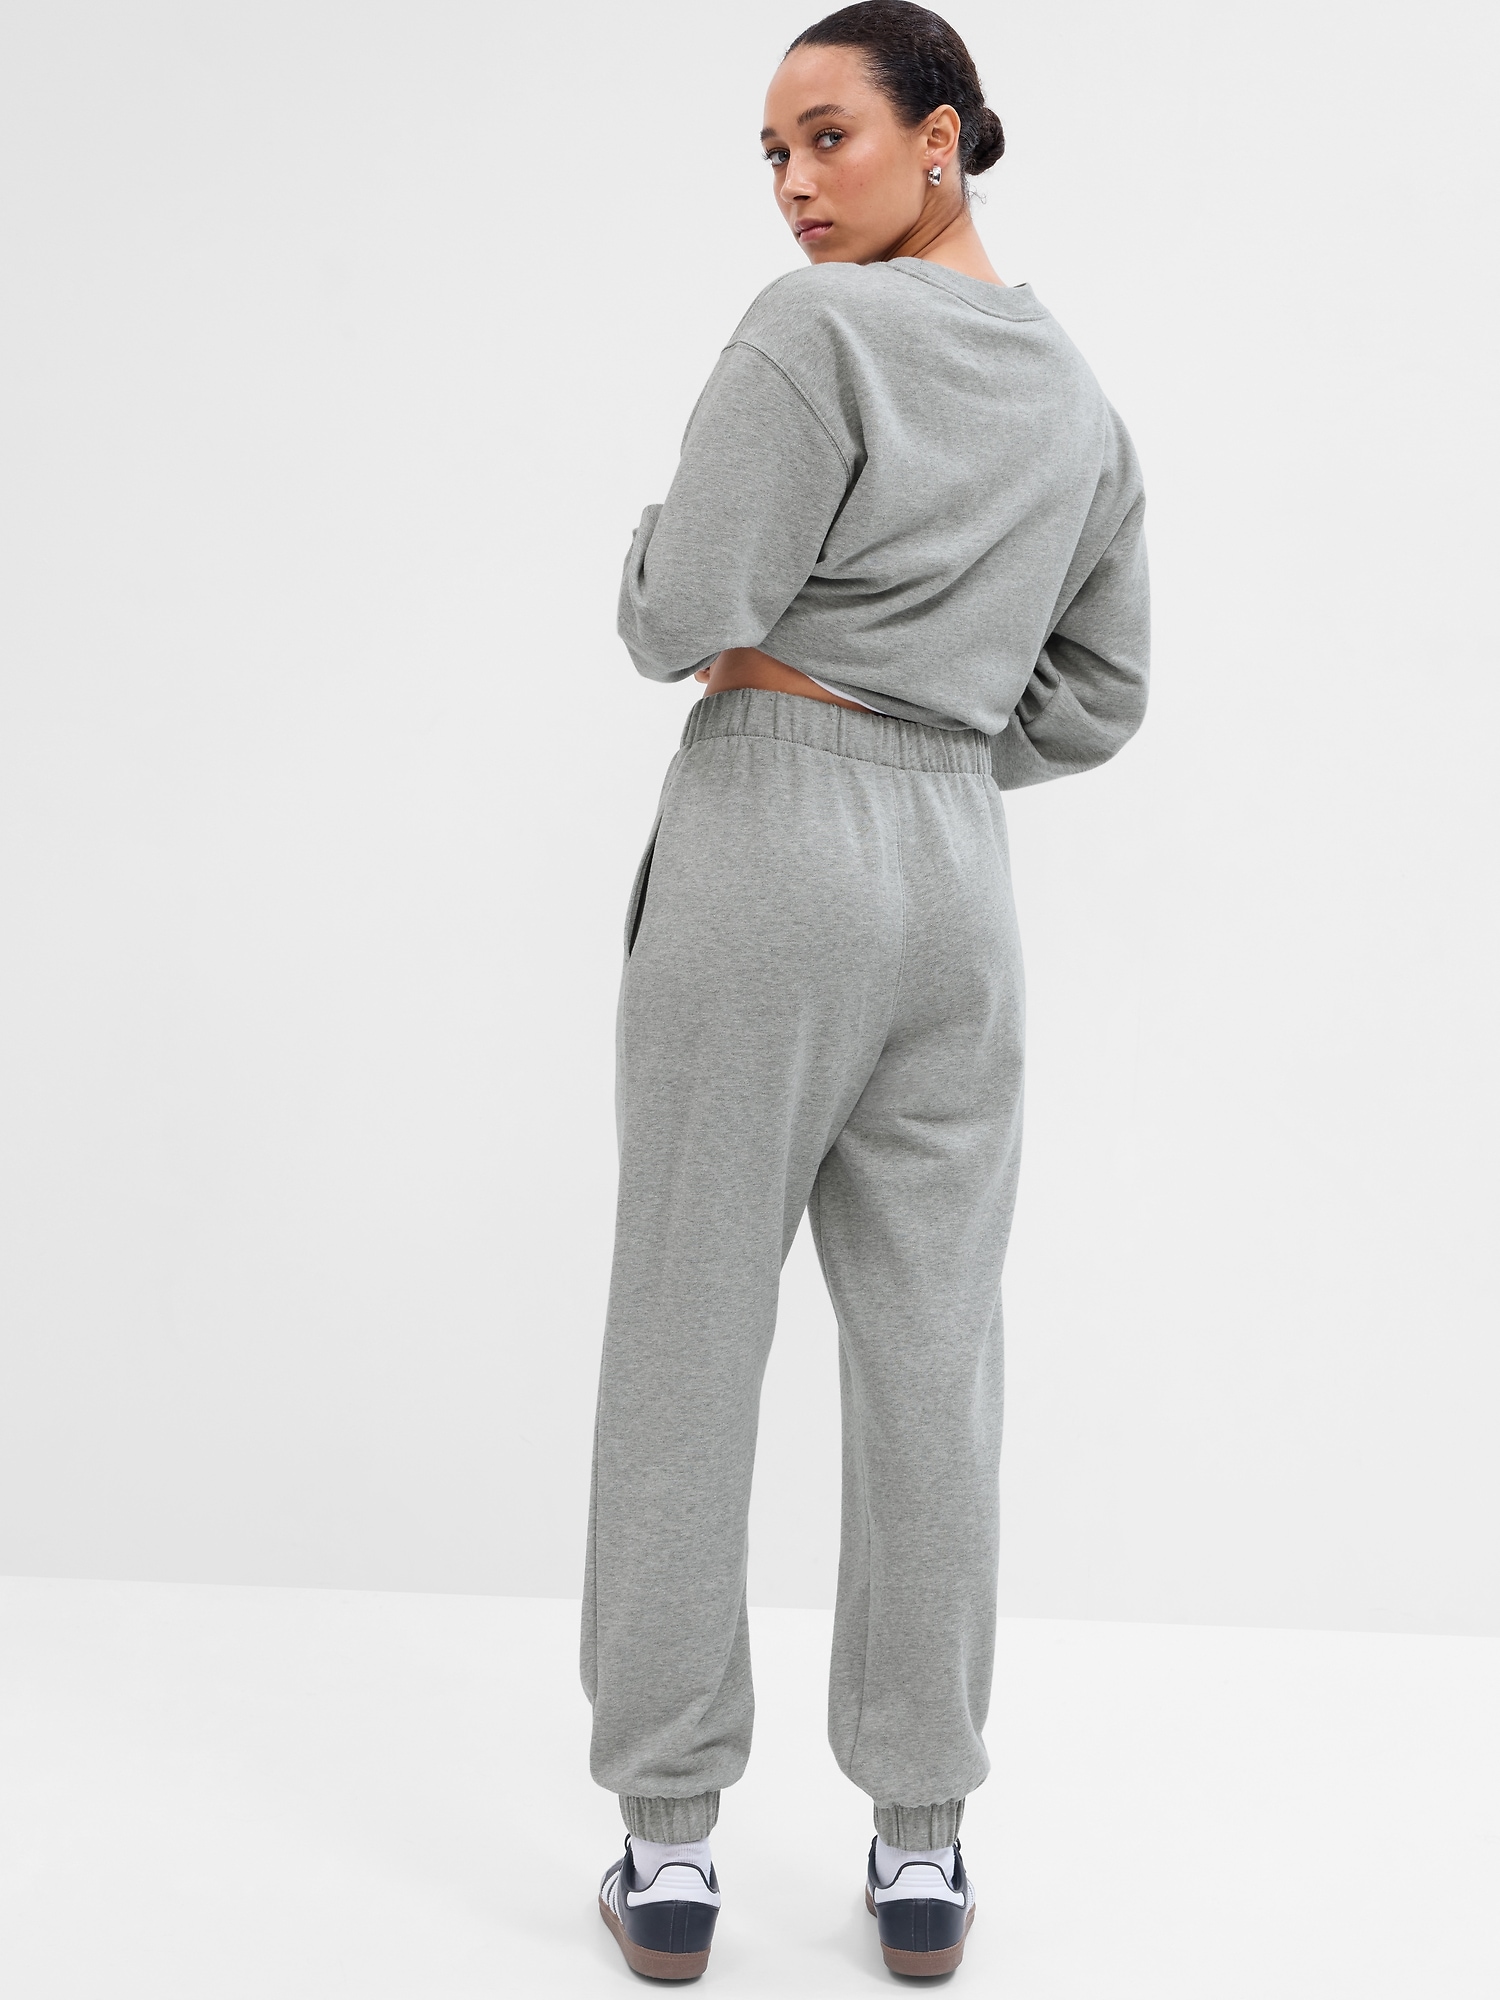 Relaxed Fleece Sweatpants | Gap Factory